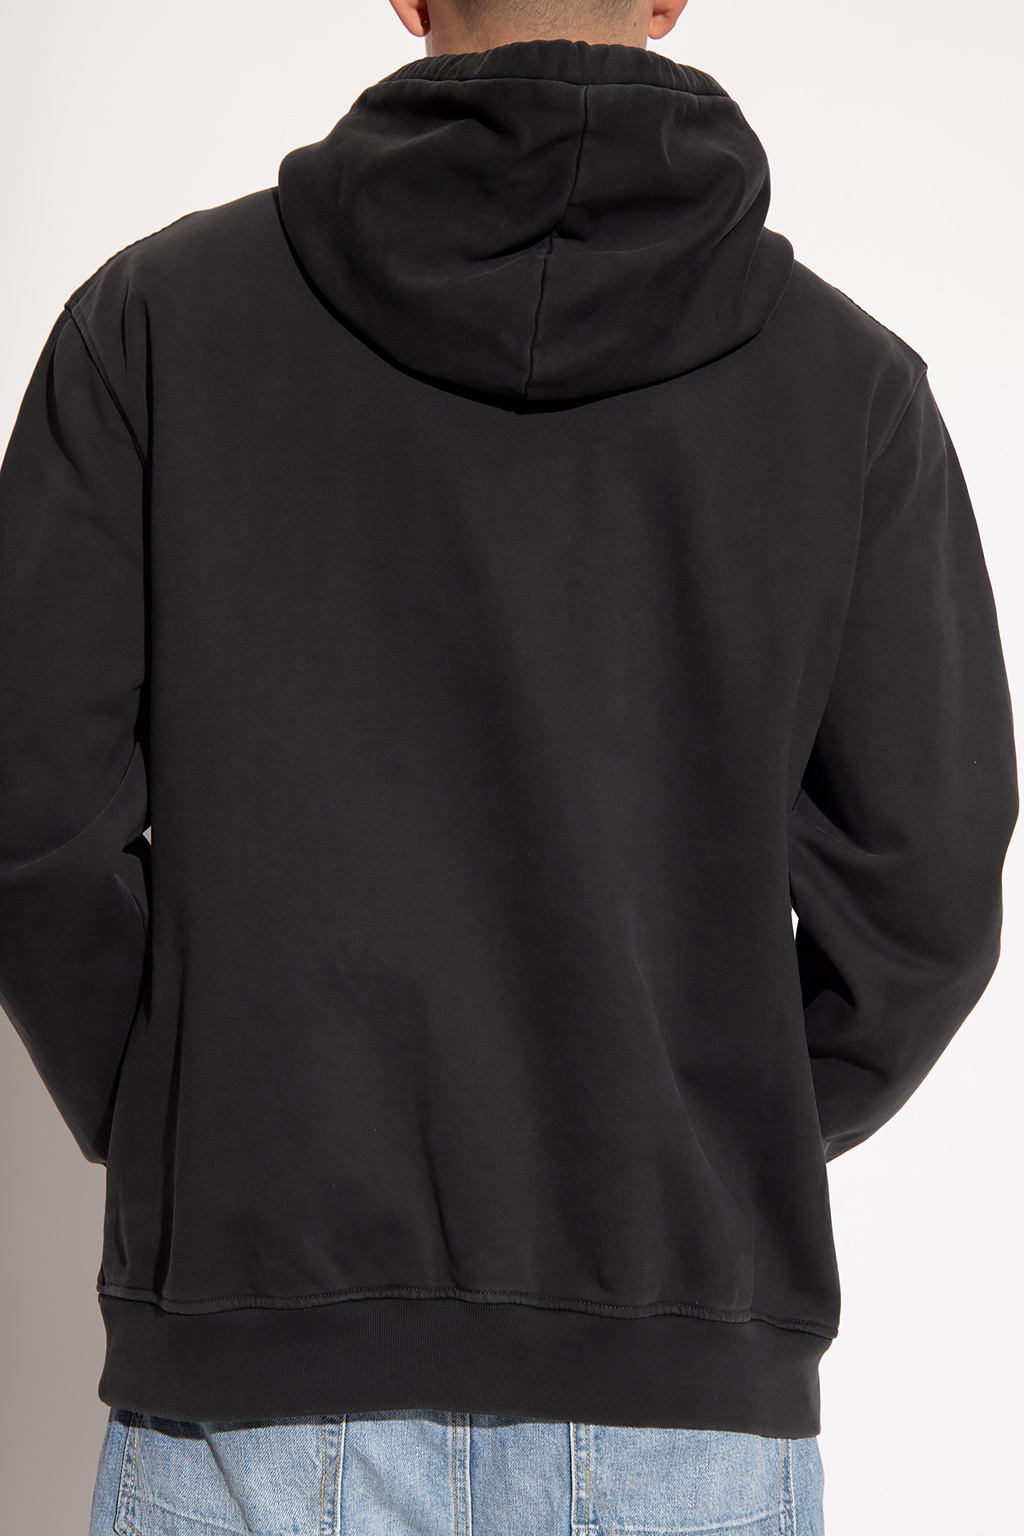 AllSaints ‘Smudge’ hoodie